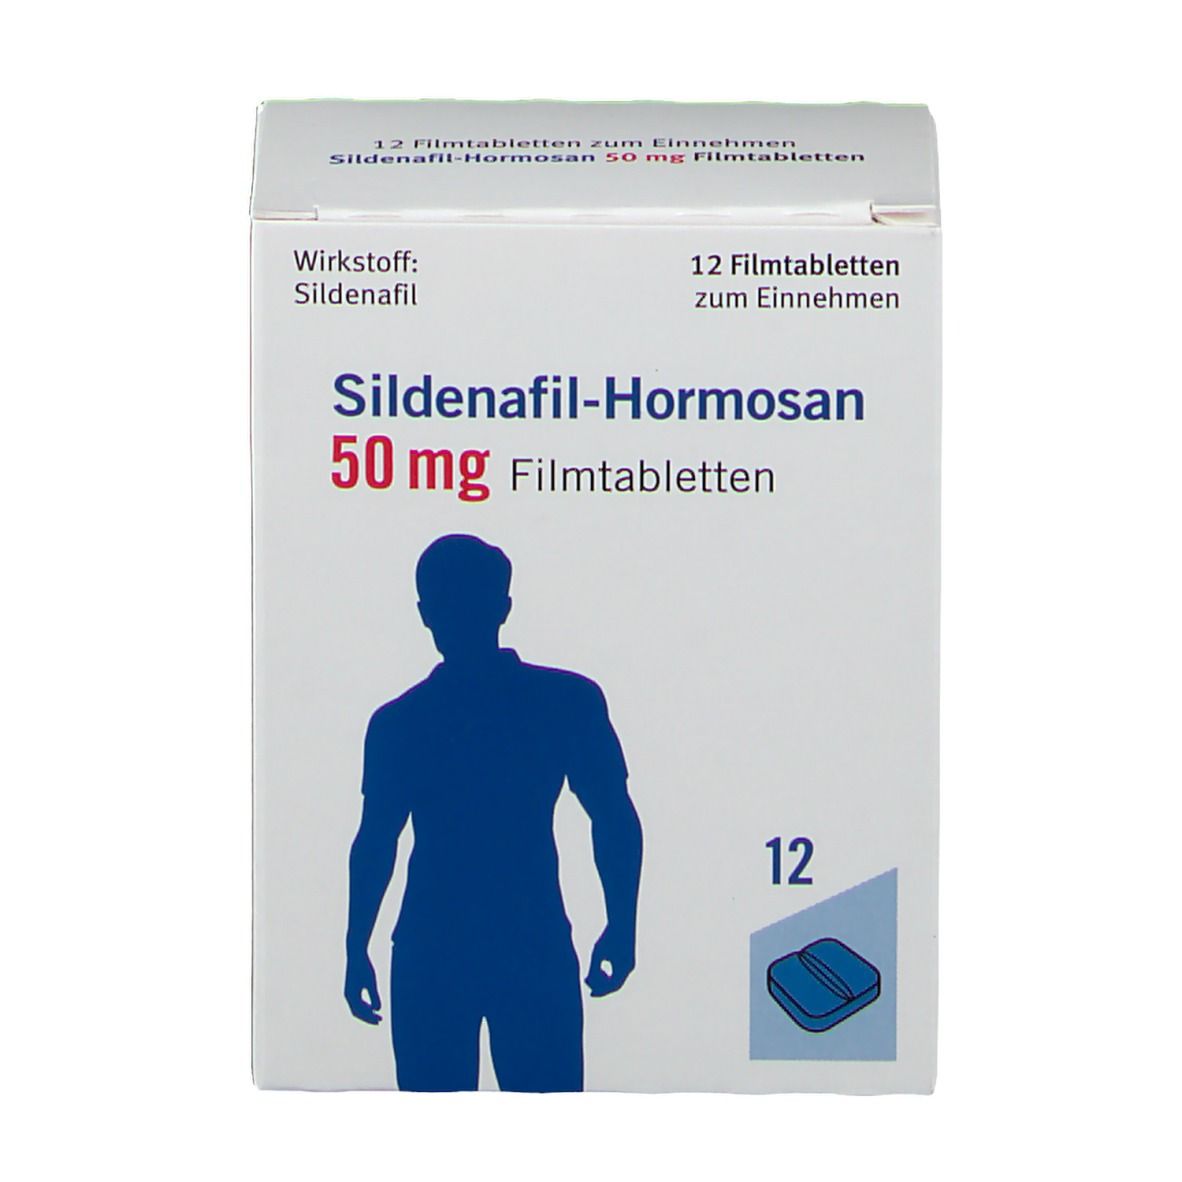 Sildenafil-Hormosan 50 mg